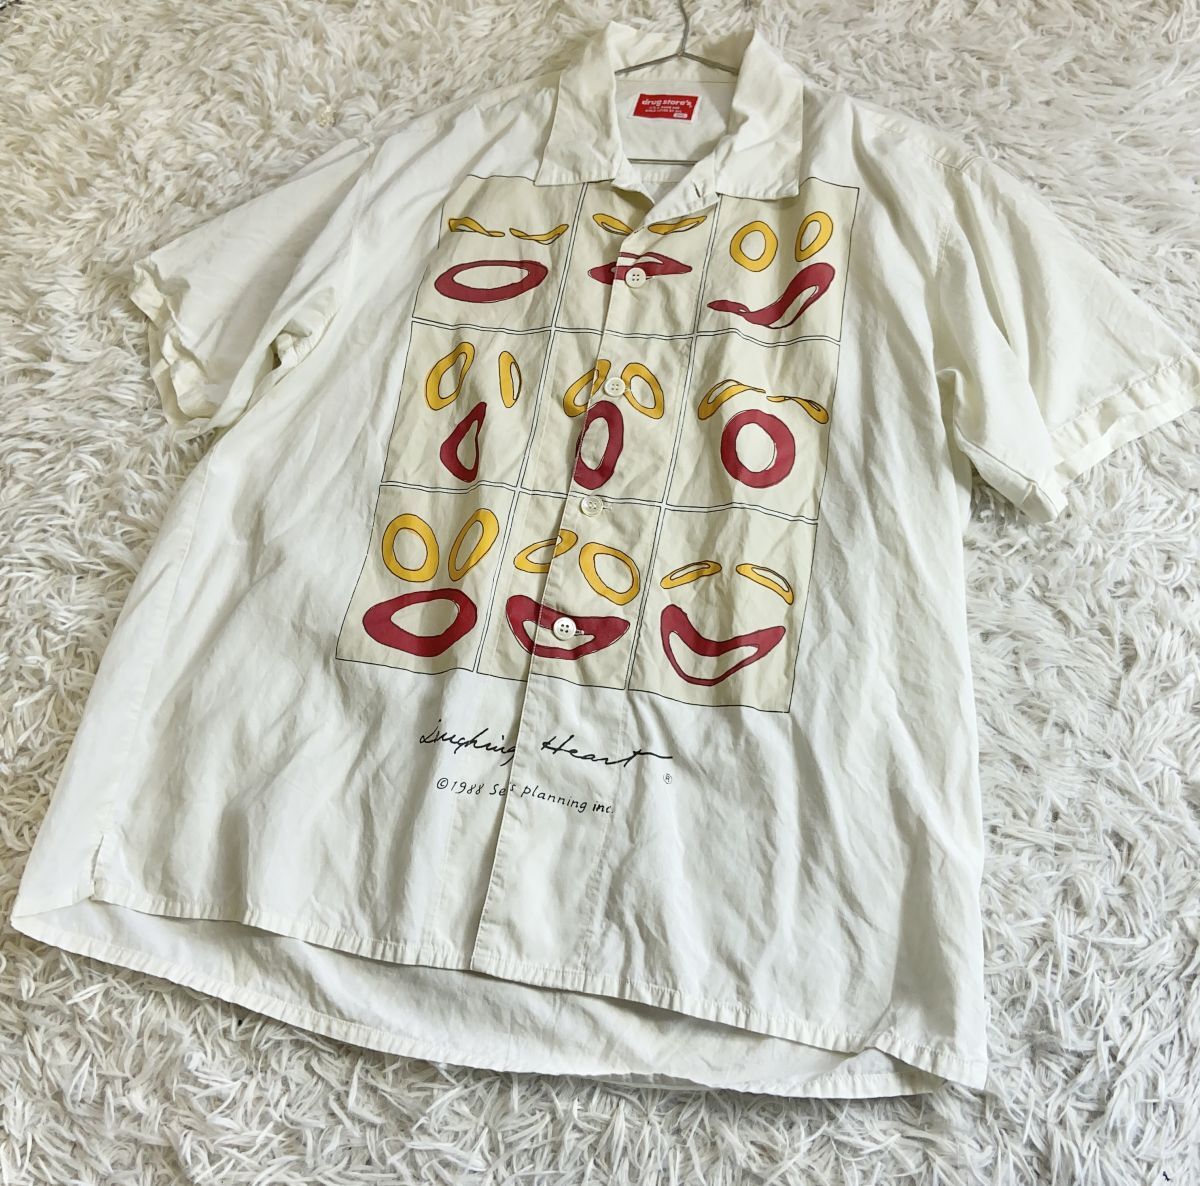 100 иен старт * drug store\'s Drug Store's модный дизайн рубашка блуза свободно body type покрытие 